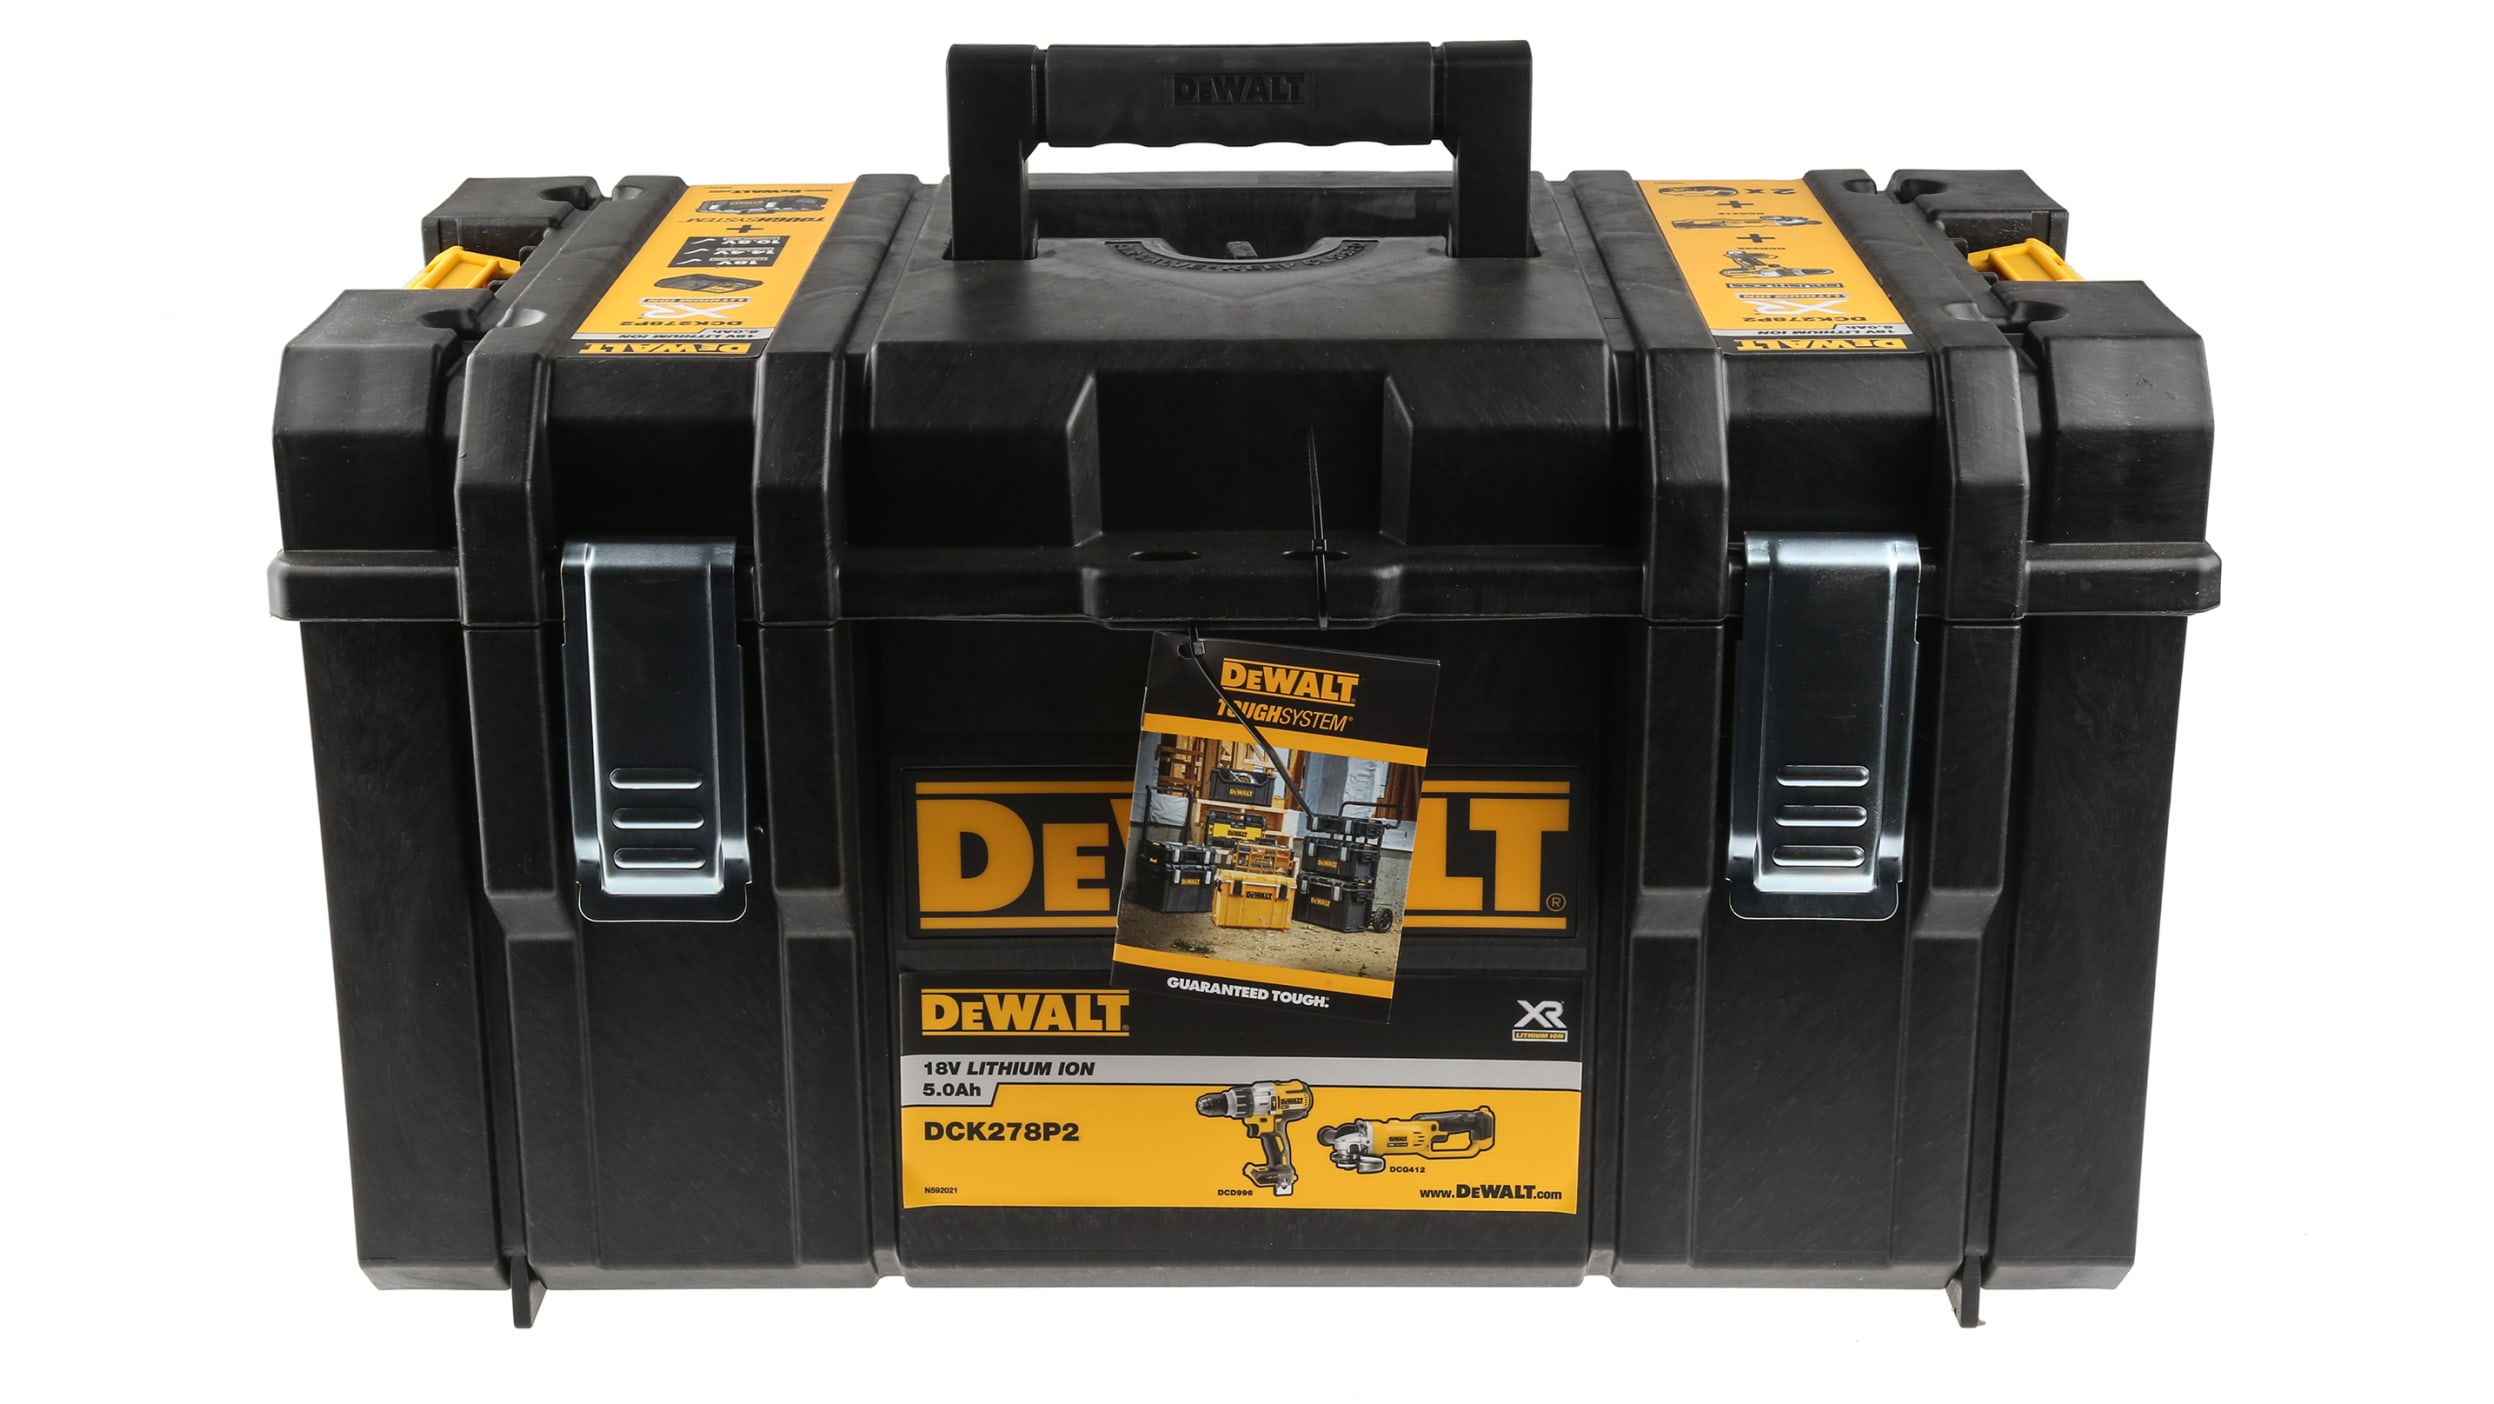 Dewalt DCK690P3T-QW kit de 6 herramientas a batería 18V XR » Pro Ferretería